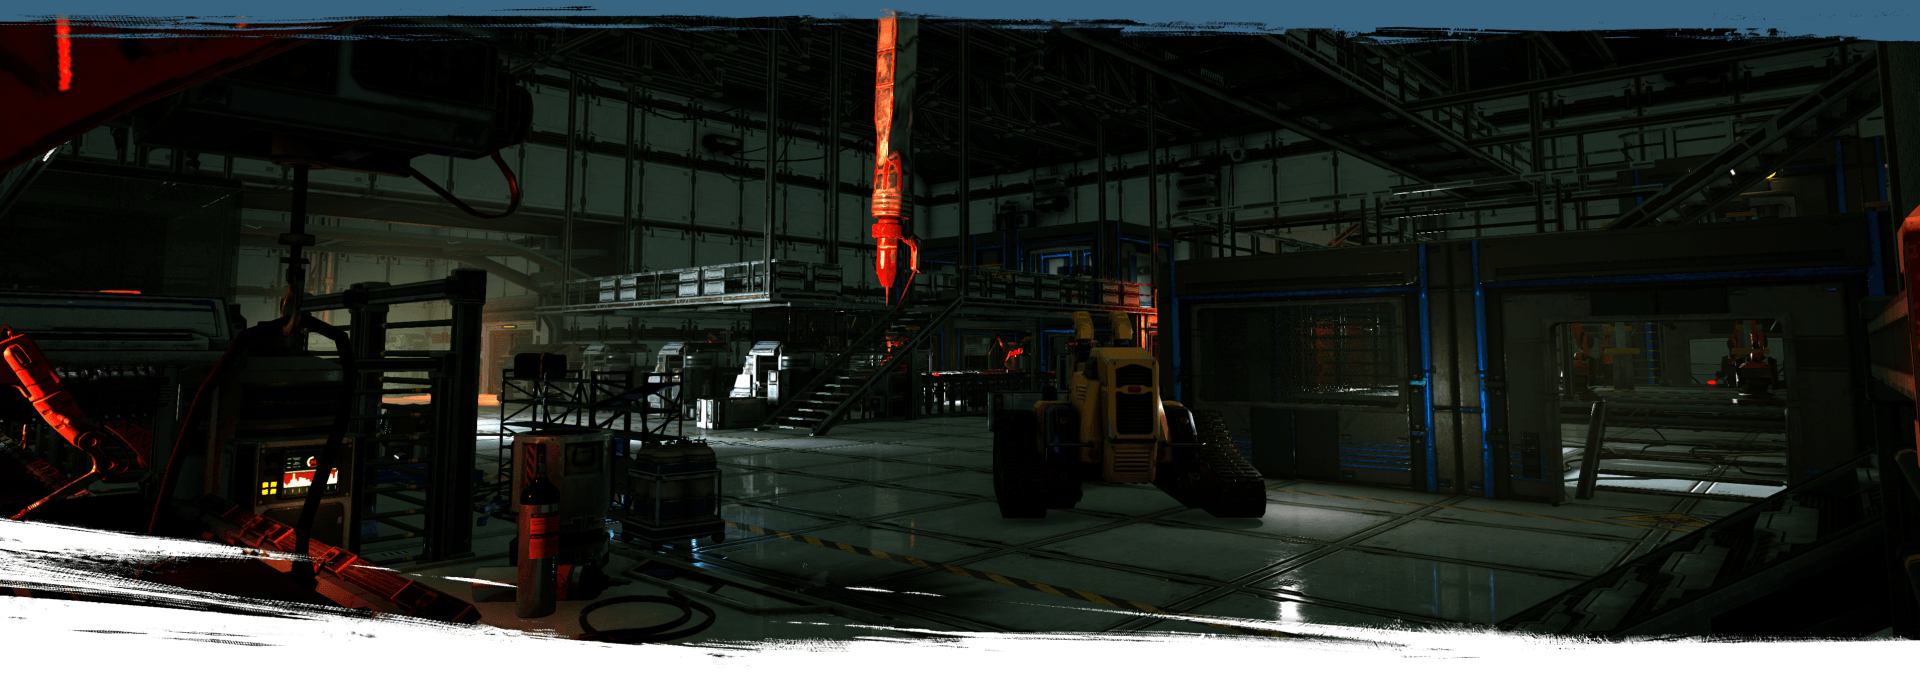 dark and industrial underground facility